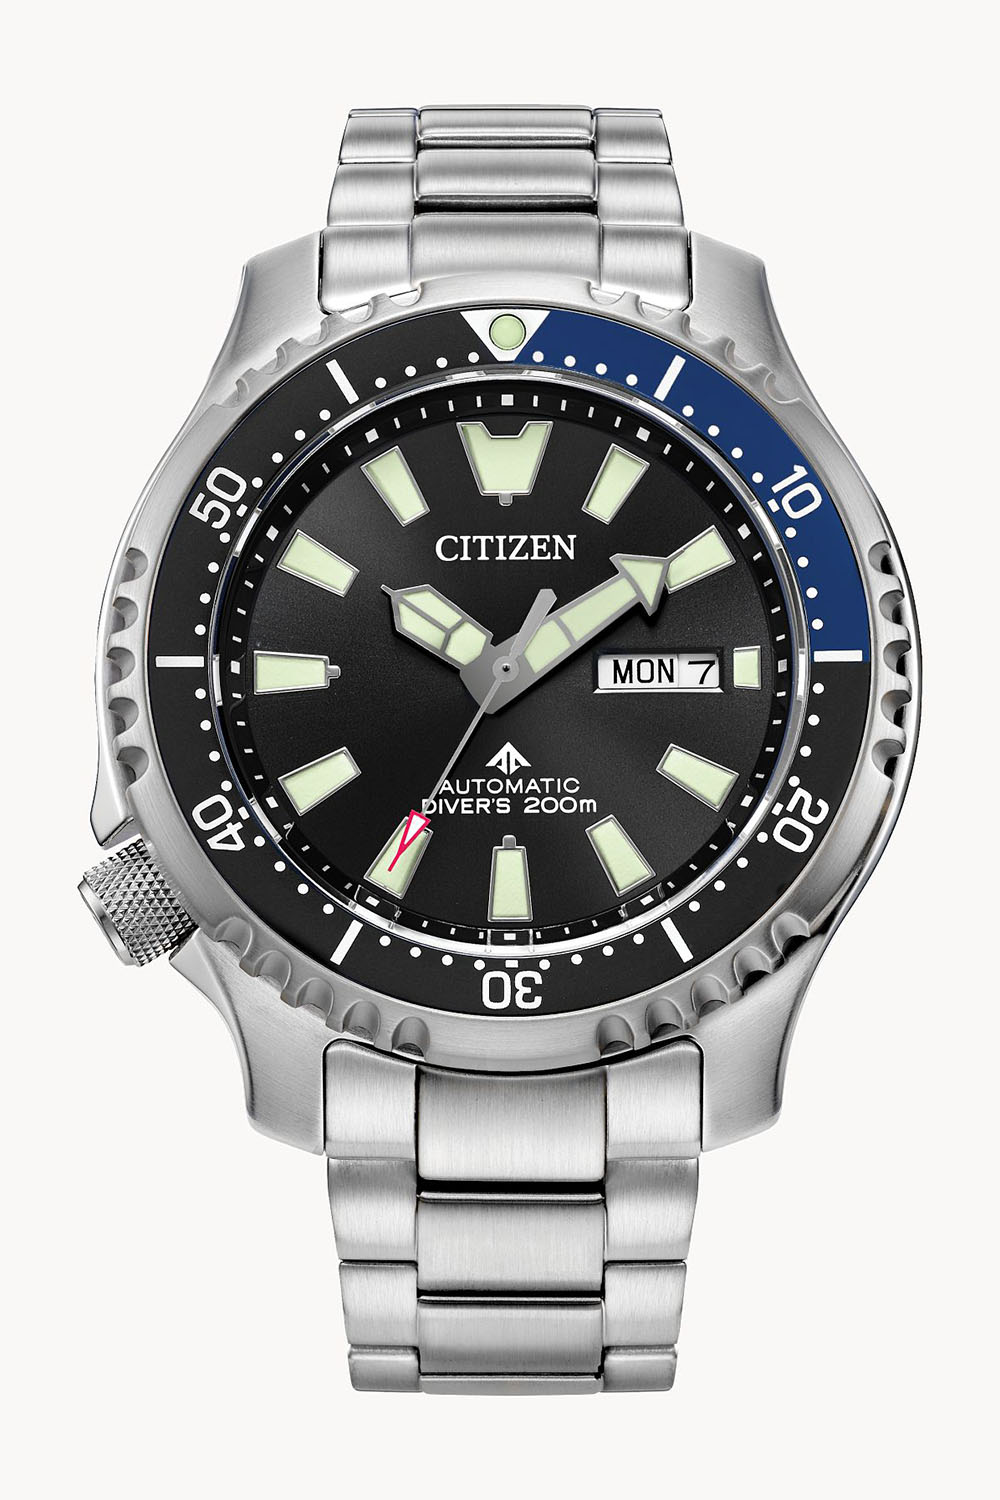 Citizen Promaster Dive Automatic 200m